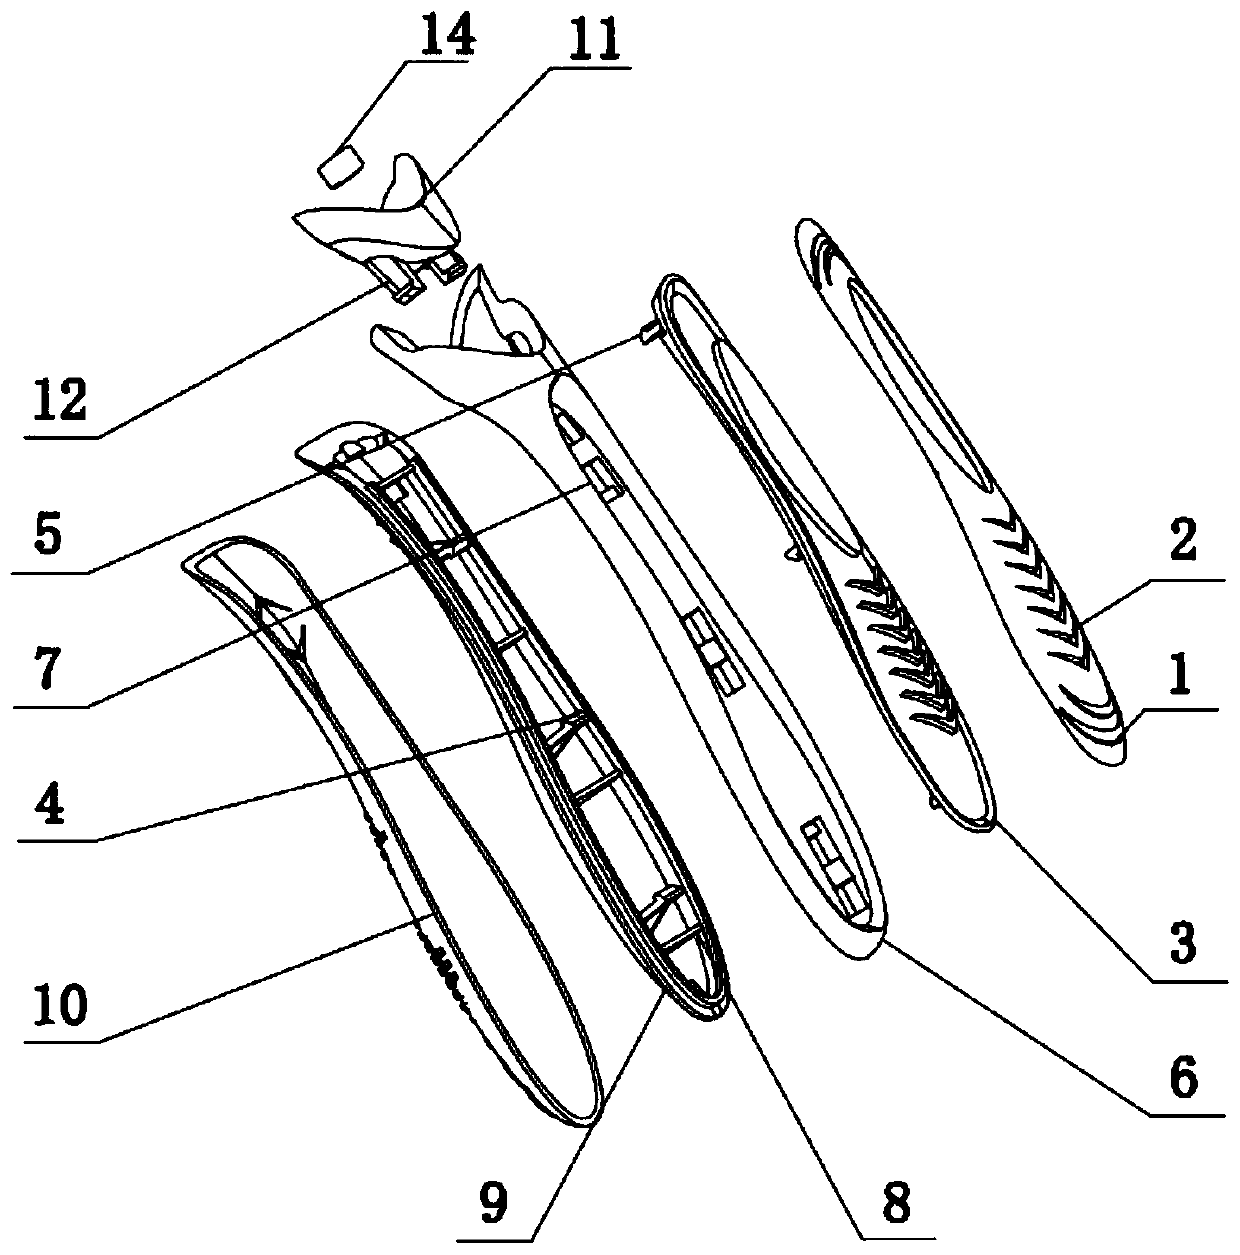 Hand-operated razor